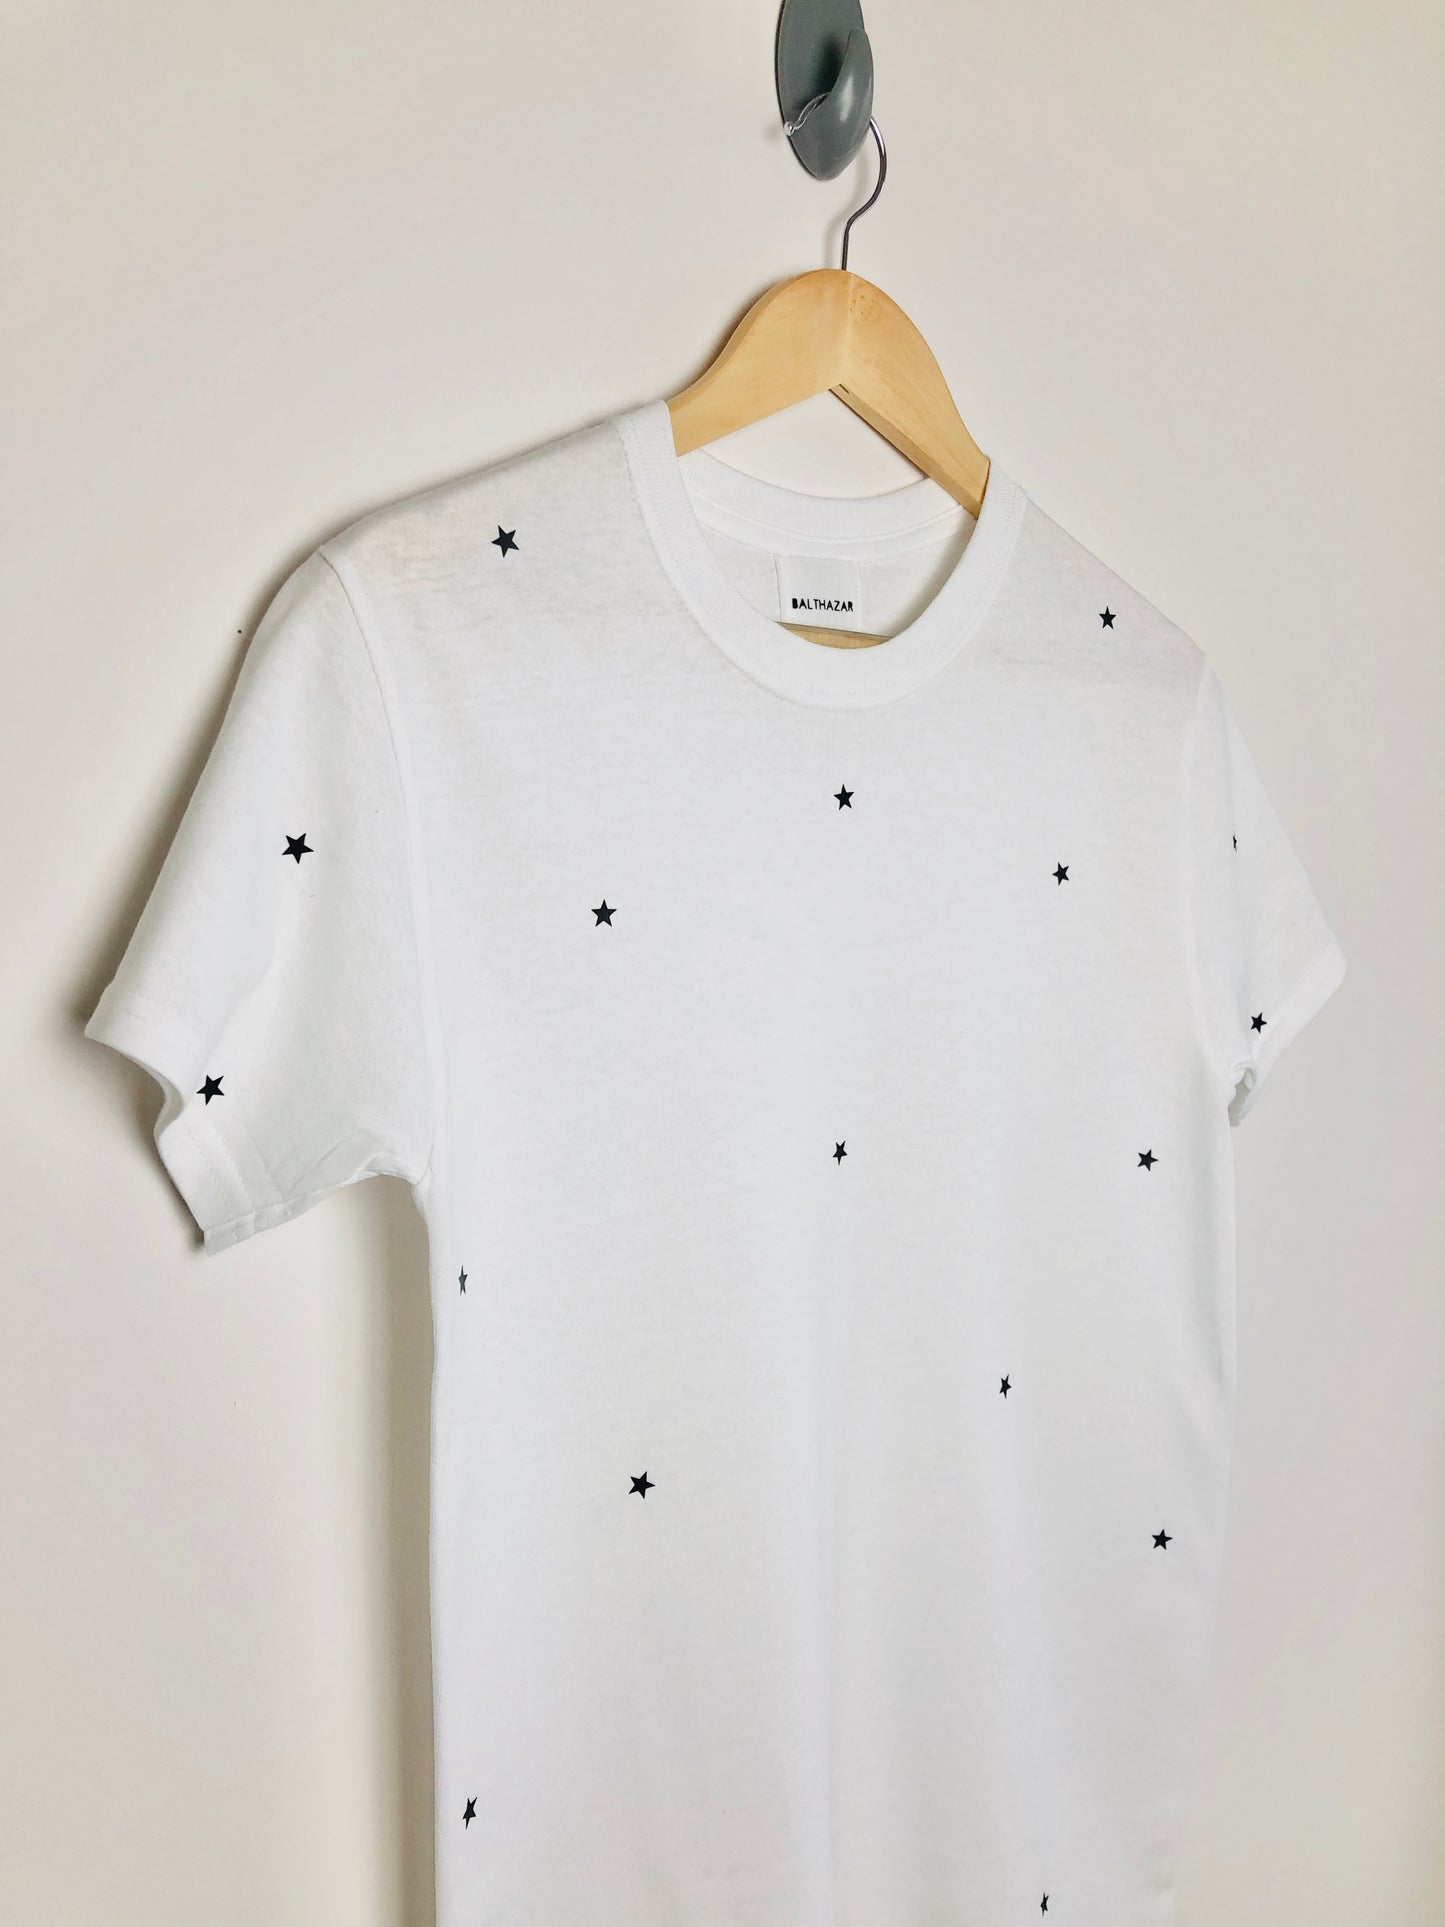 Miniature star t-shirt - Customisable